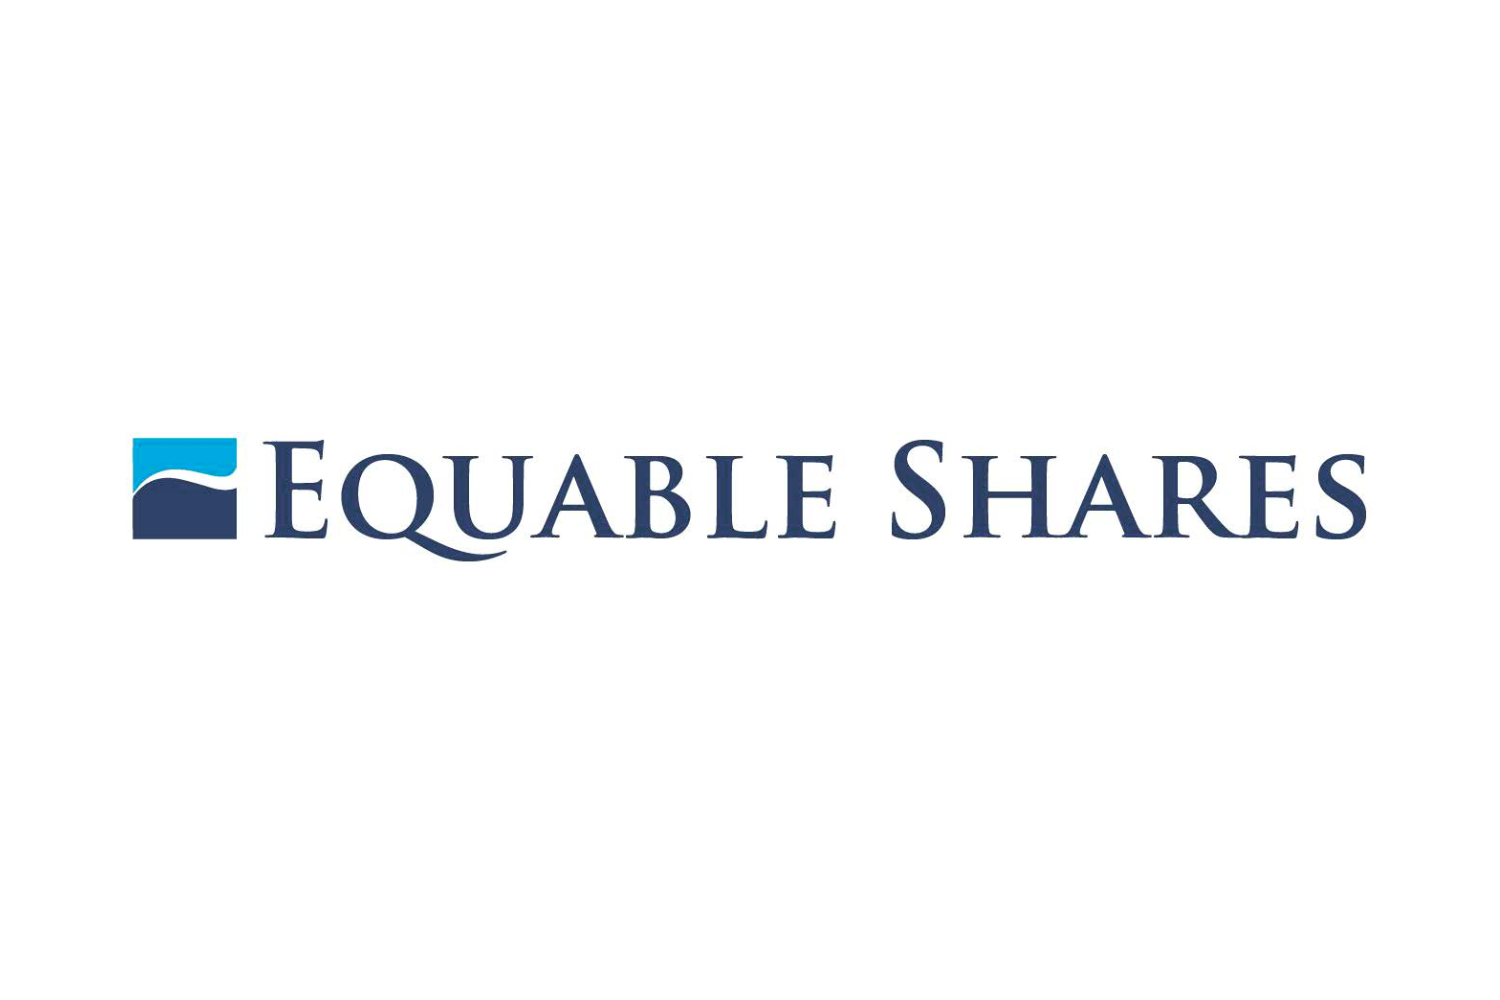 equable shares logo.png